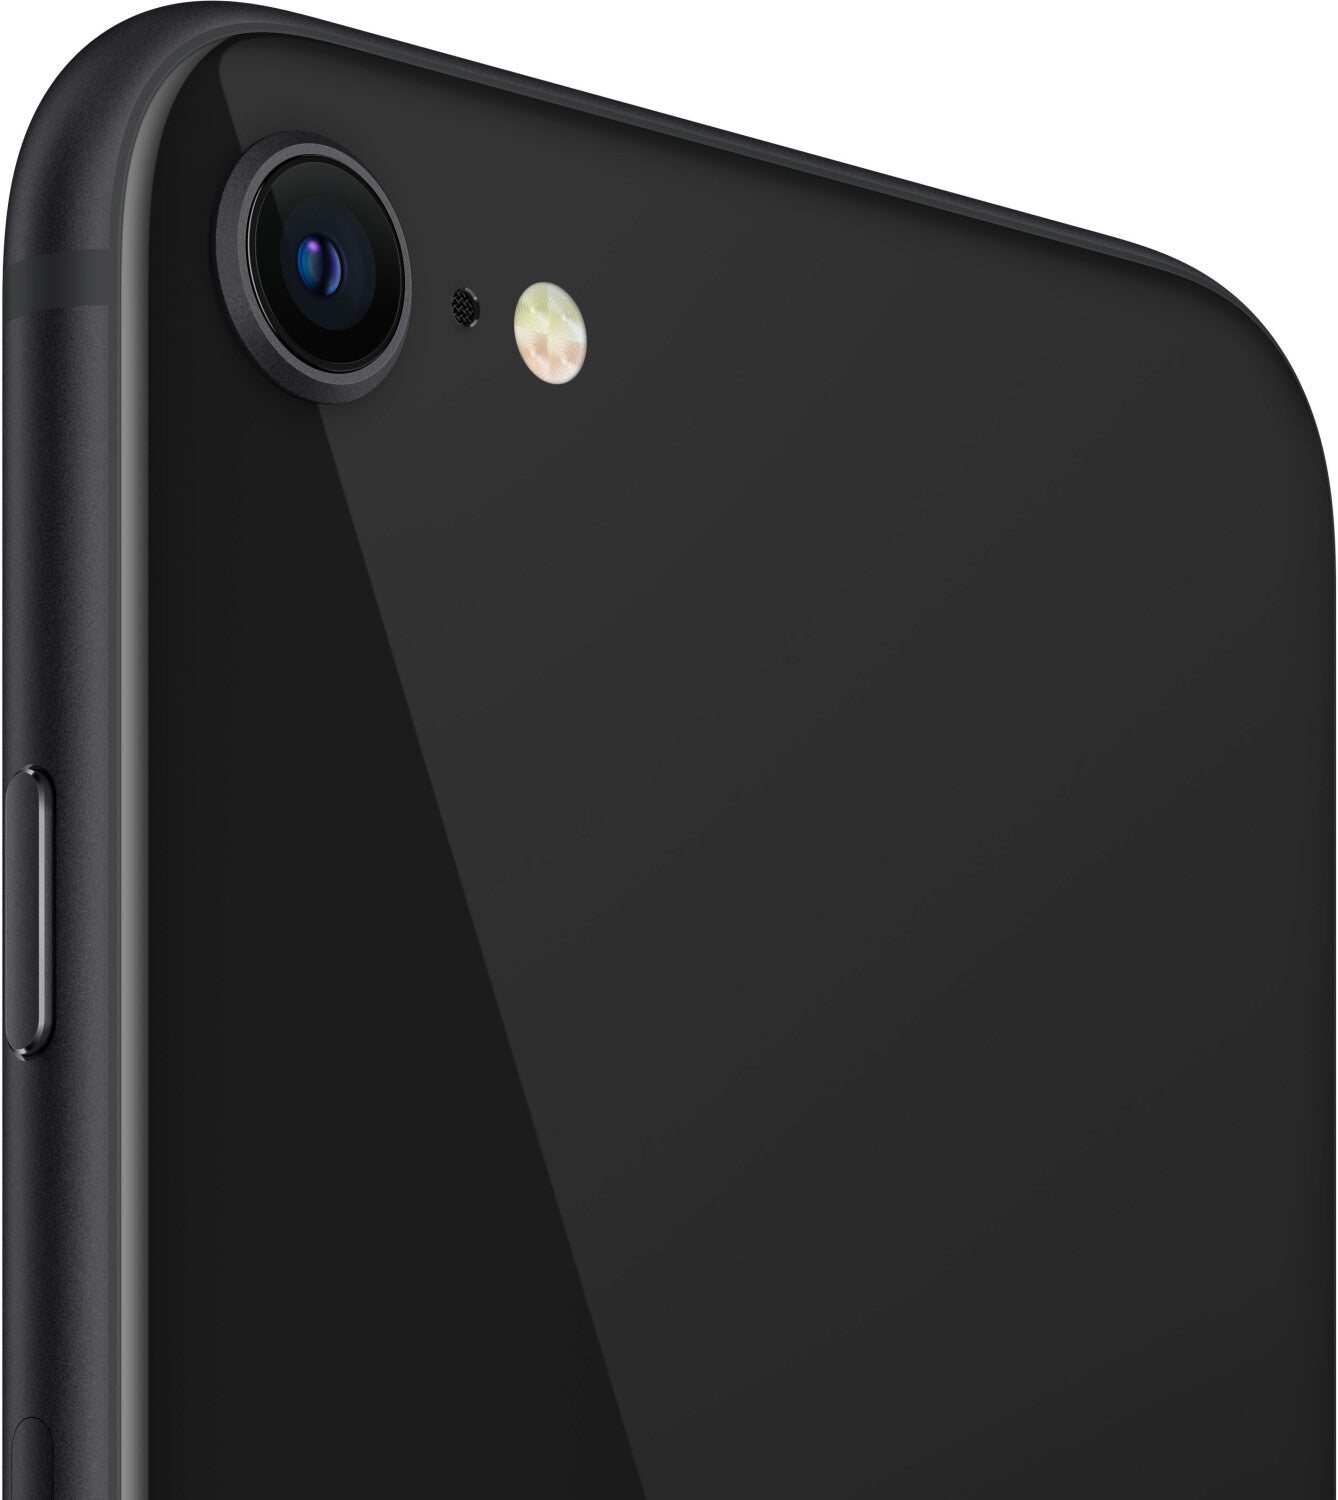 Apple iPhone SE 2020 64GB Black (2nd Generation) Grade A (Ex Display)